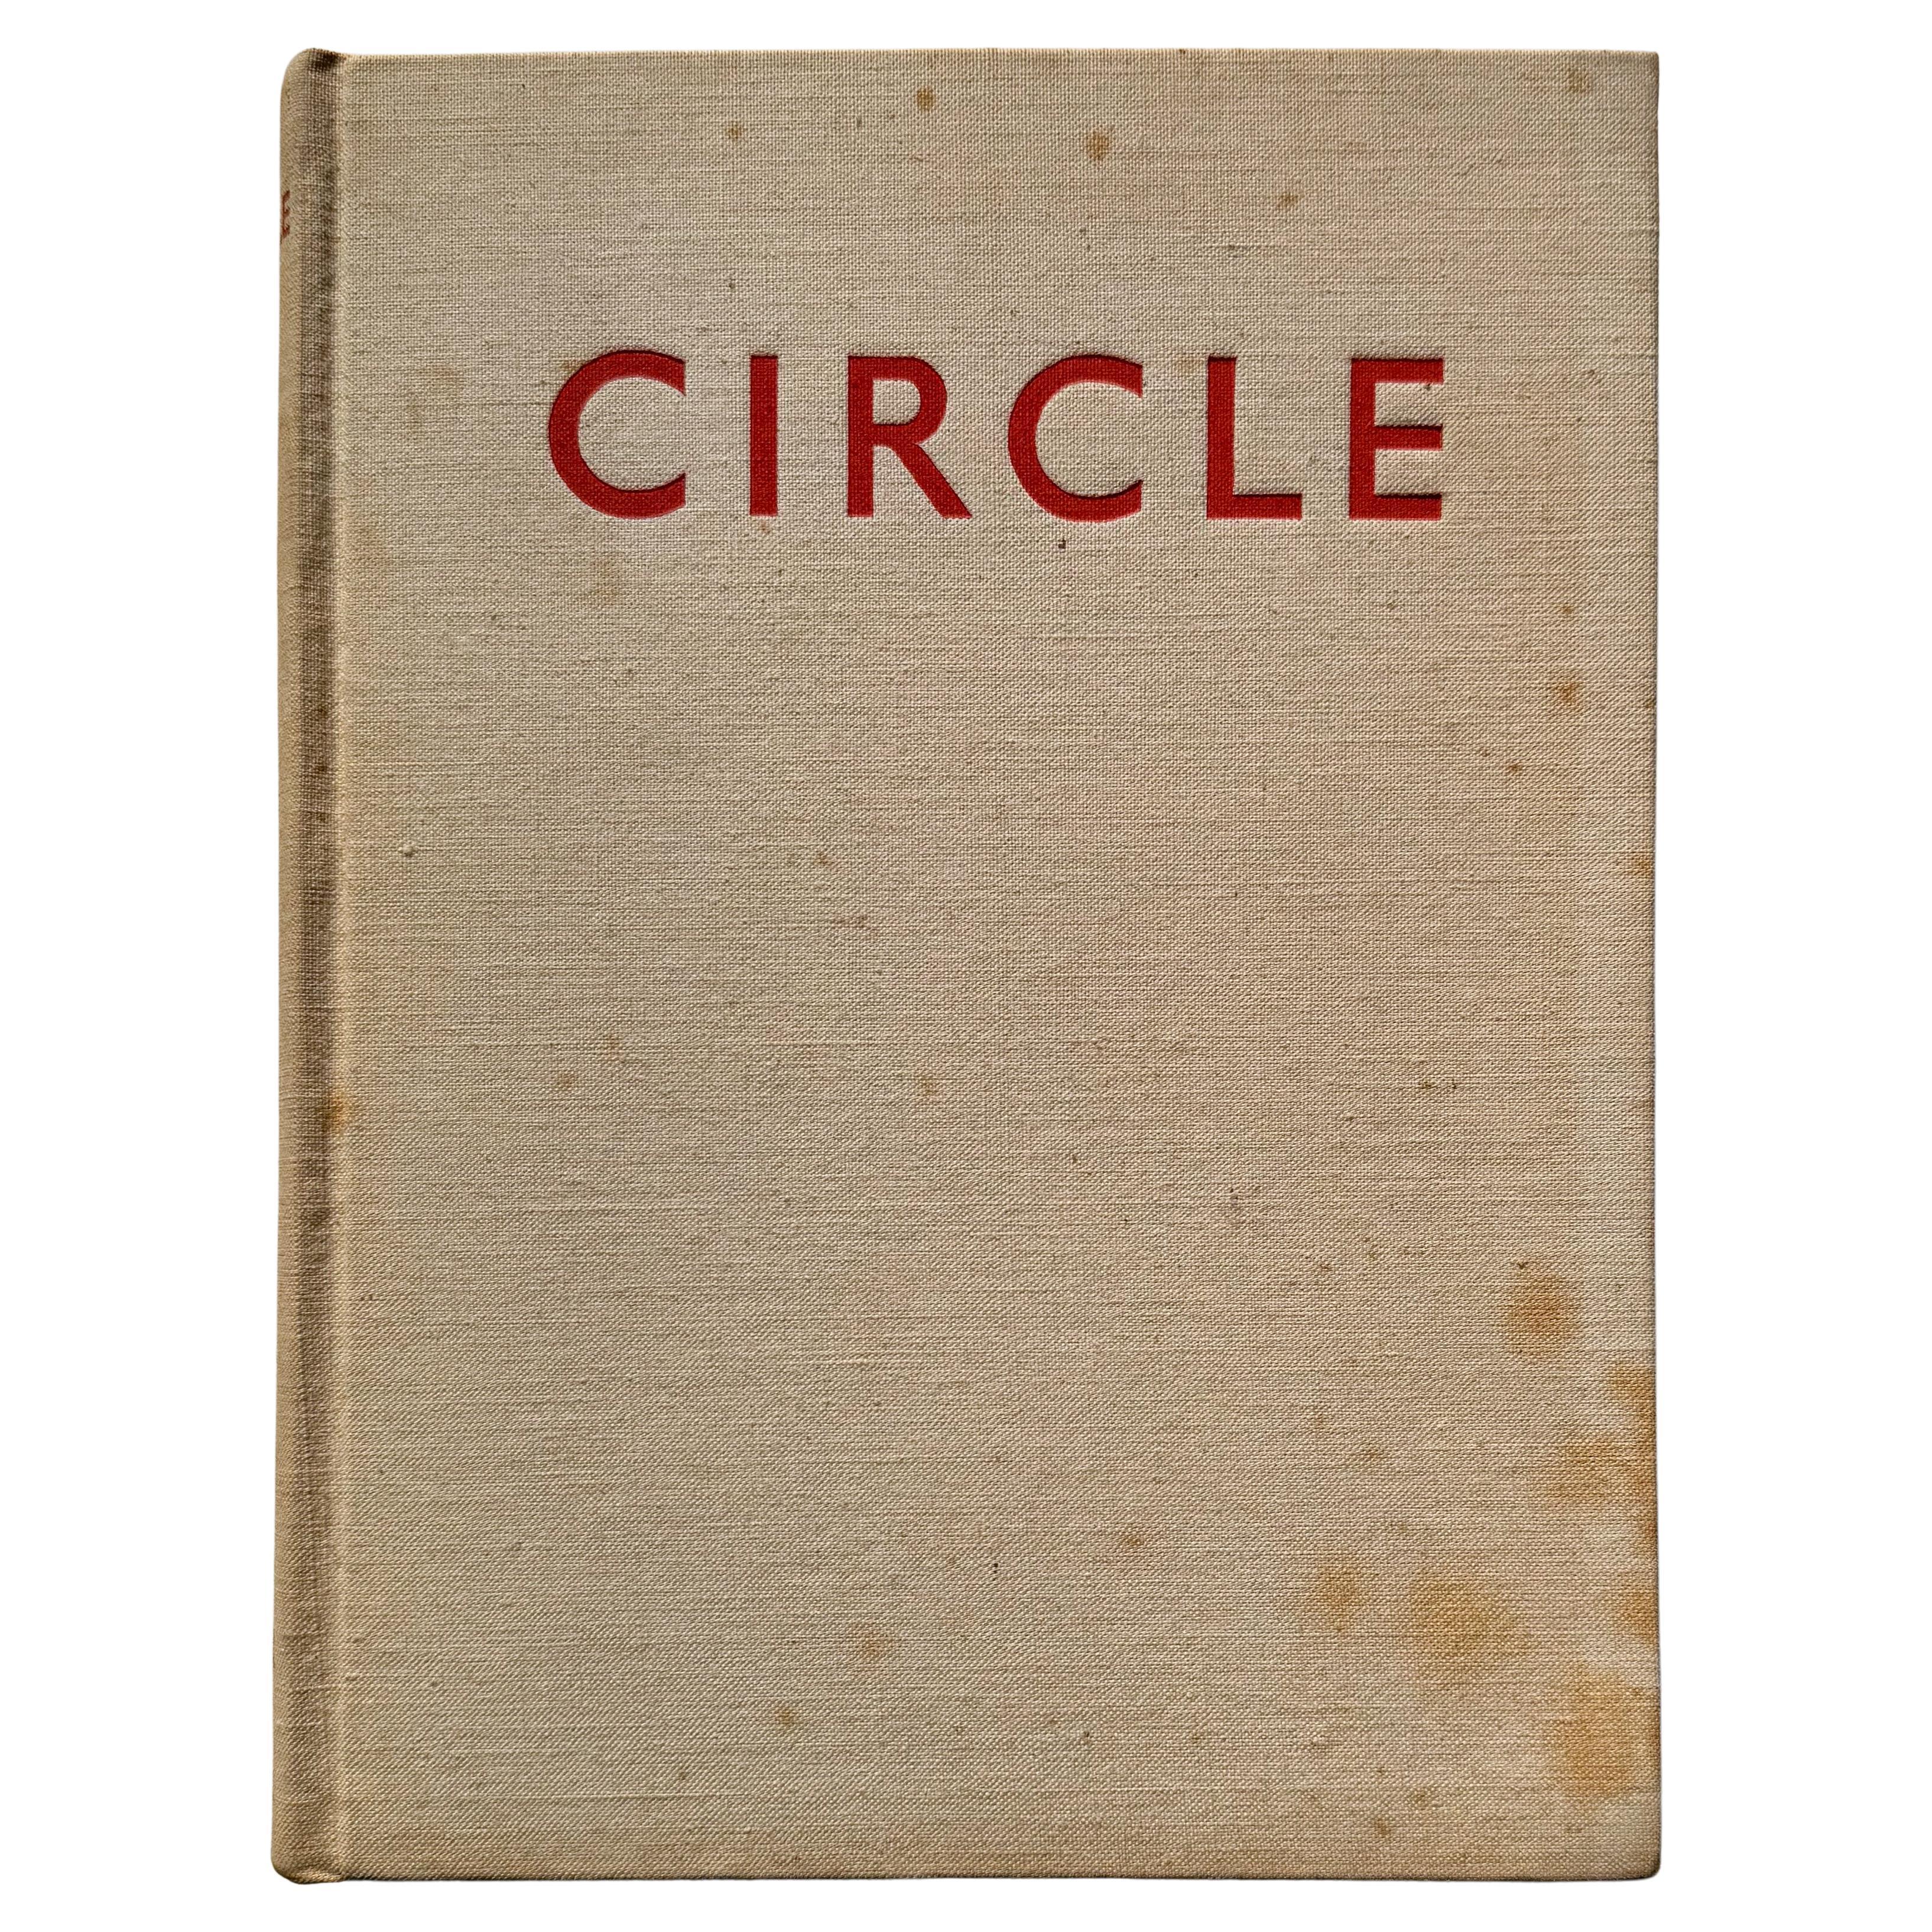 Circle: International Survey of Constructive Art  For Sale